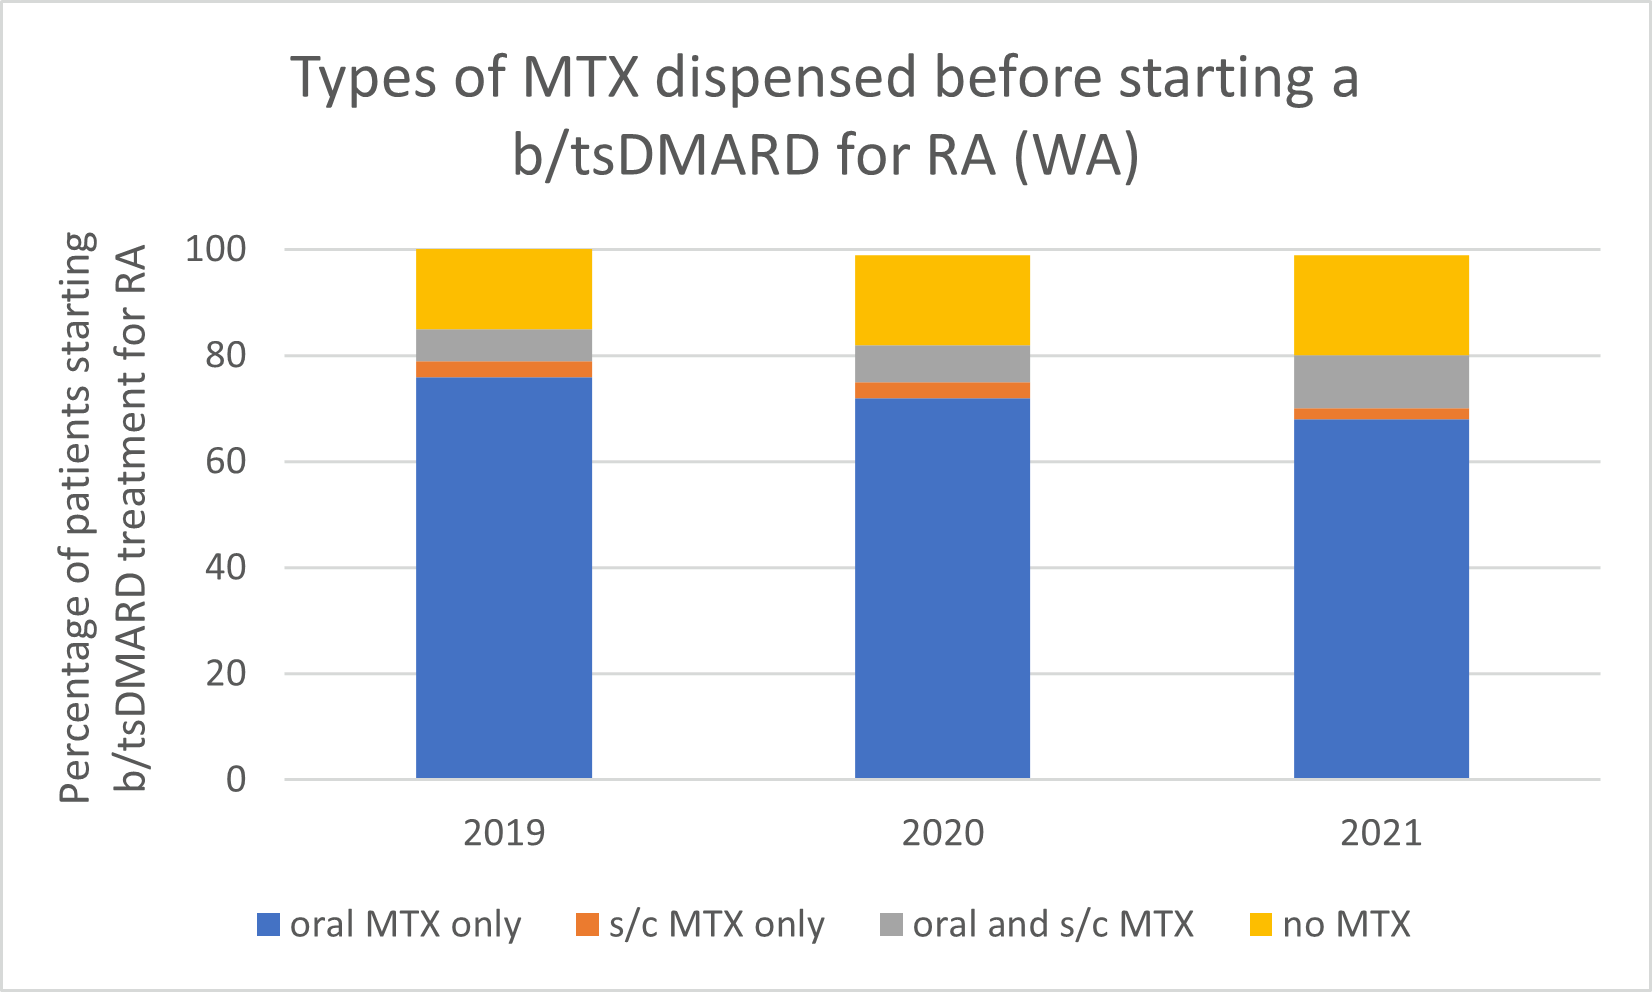 Types of methotrexate used before starting a b/tsDMARD for RA, 2019–2021 (WA)